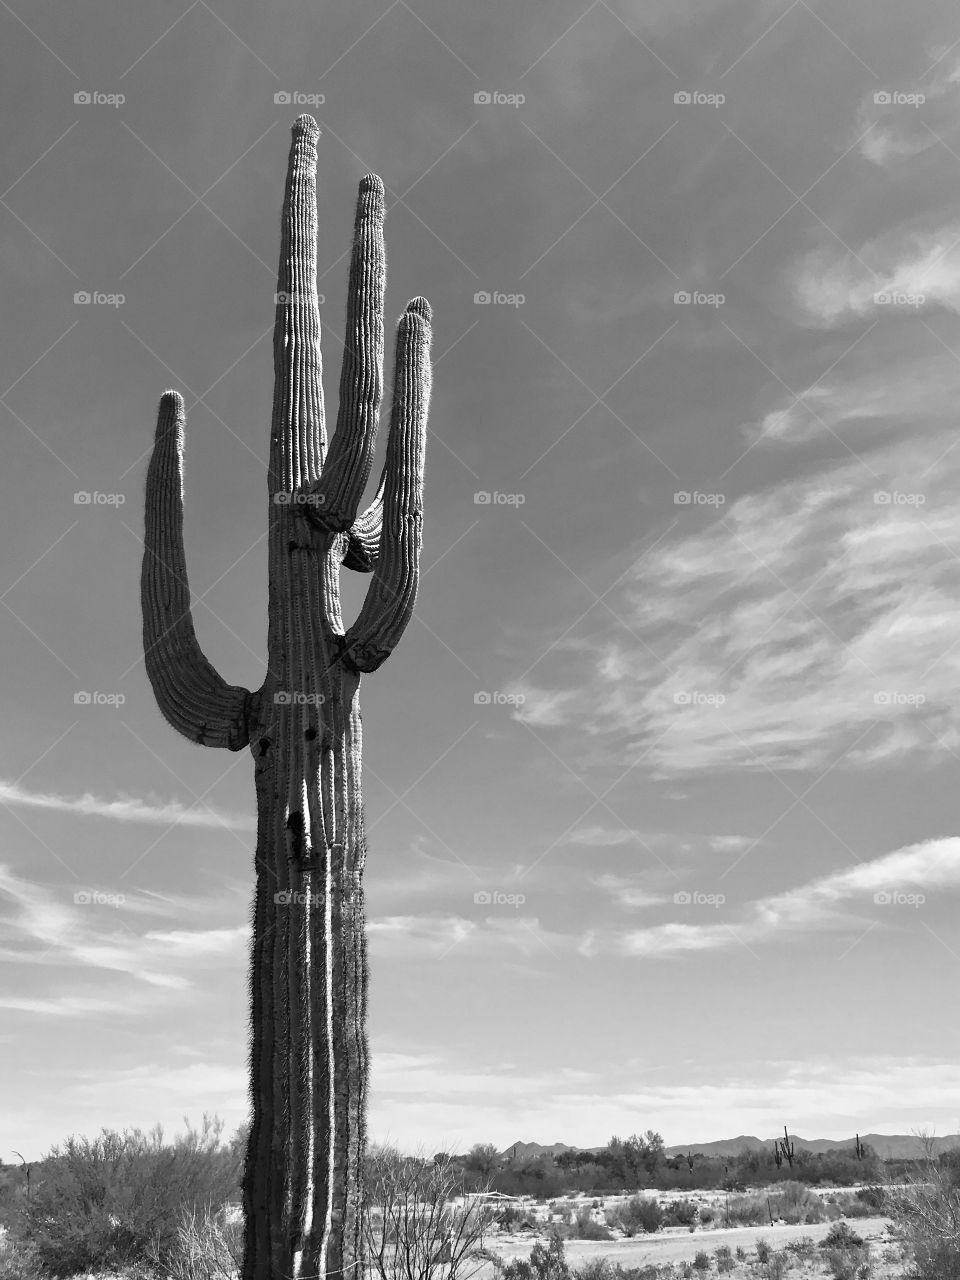 Single saguaro cactus in Arizona